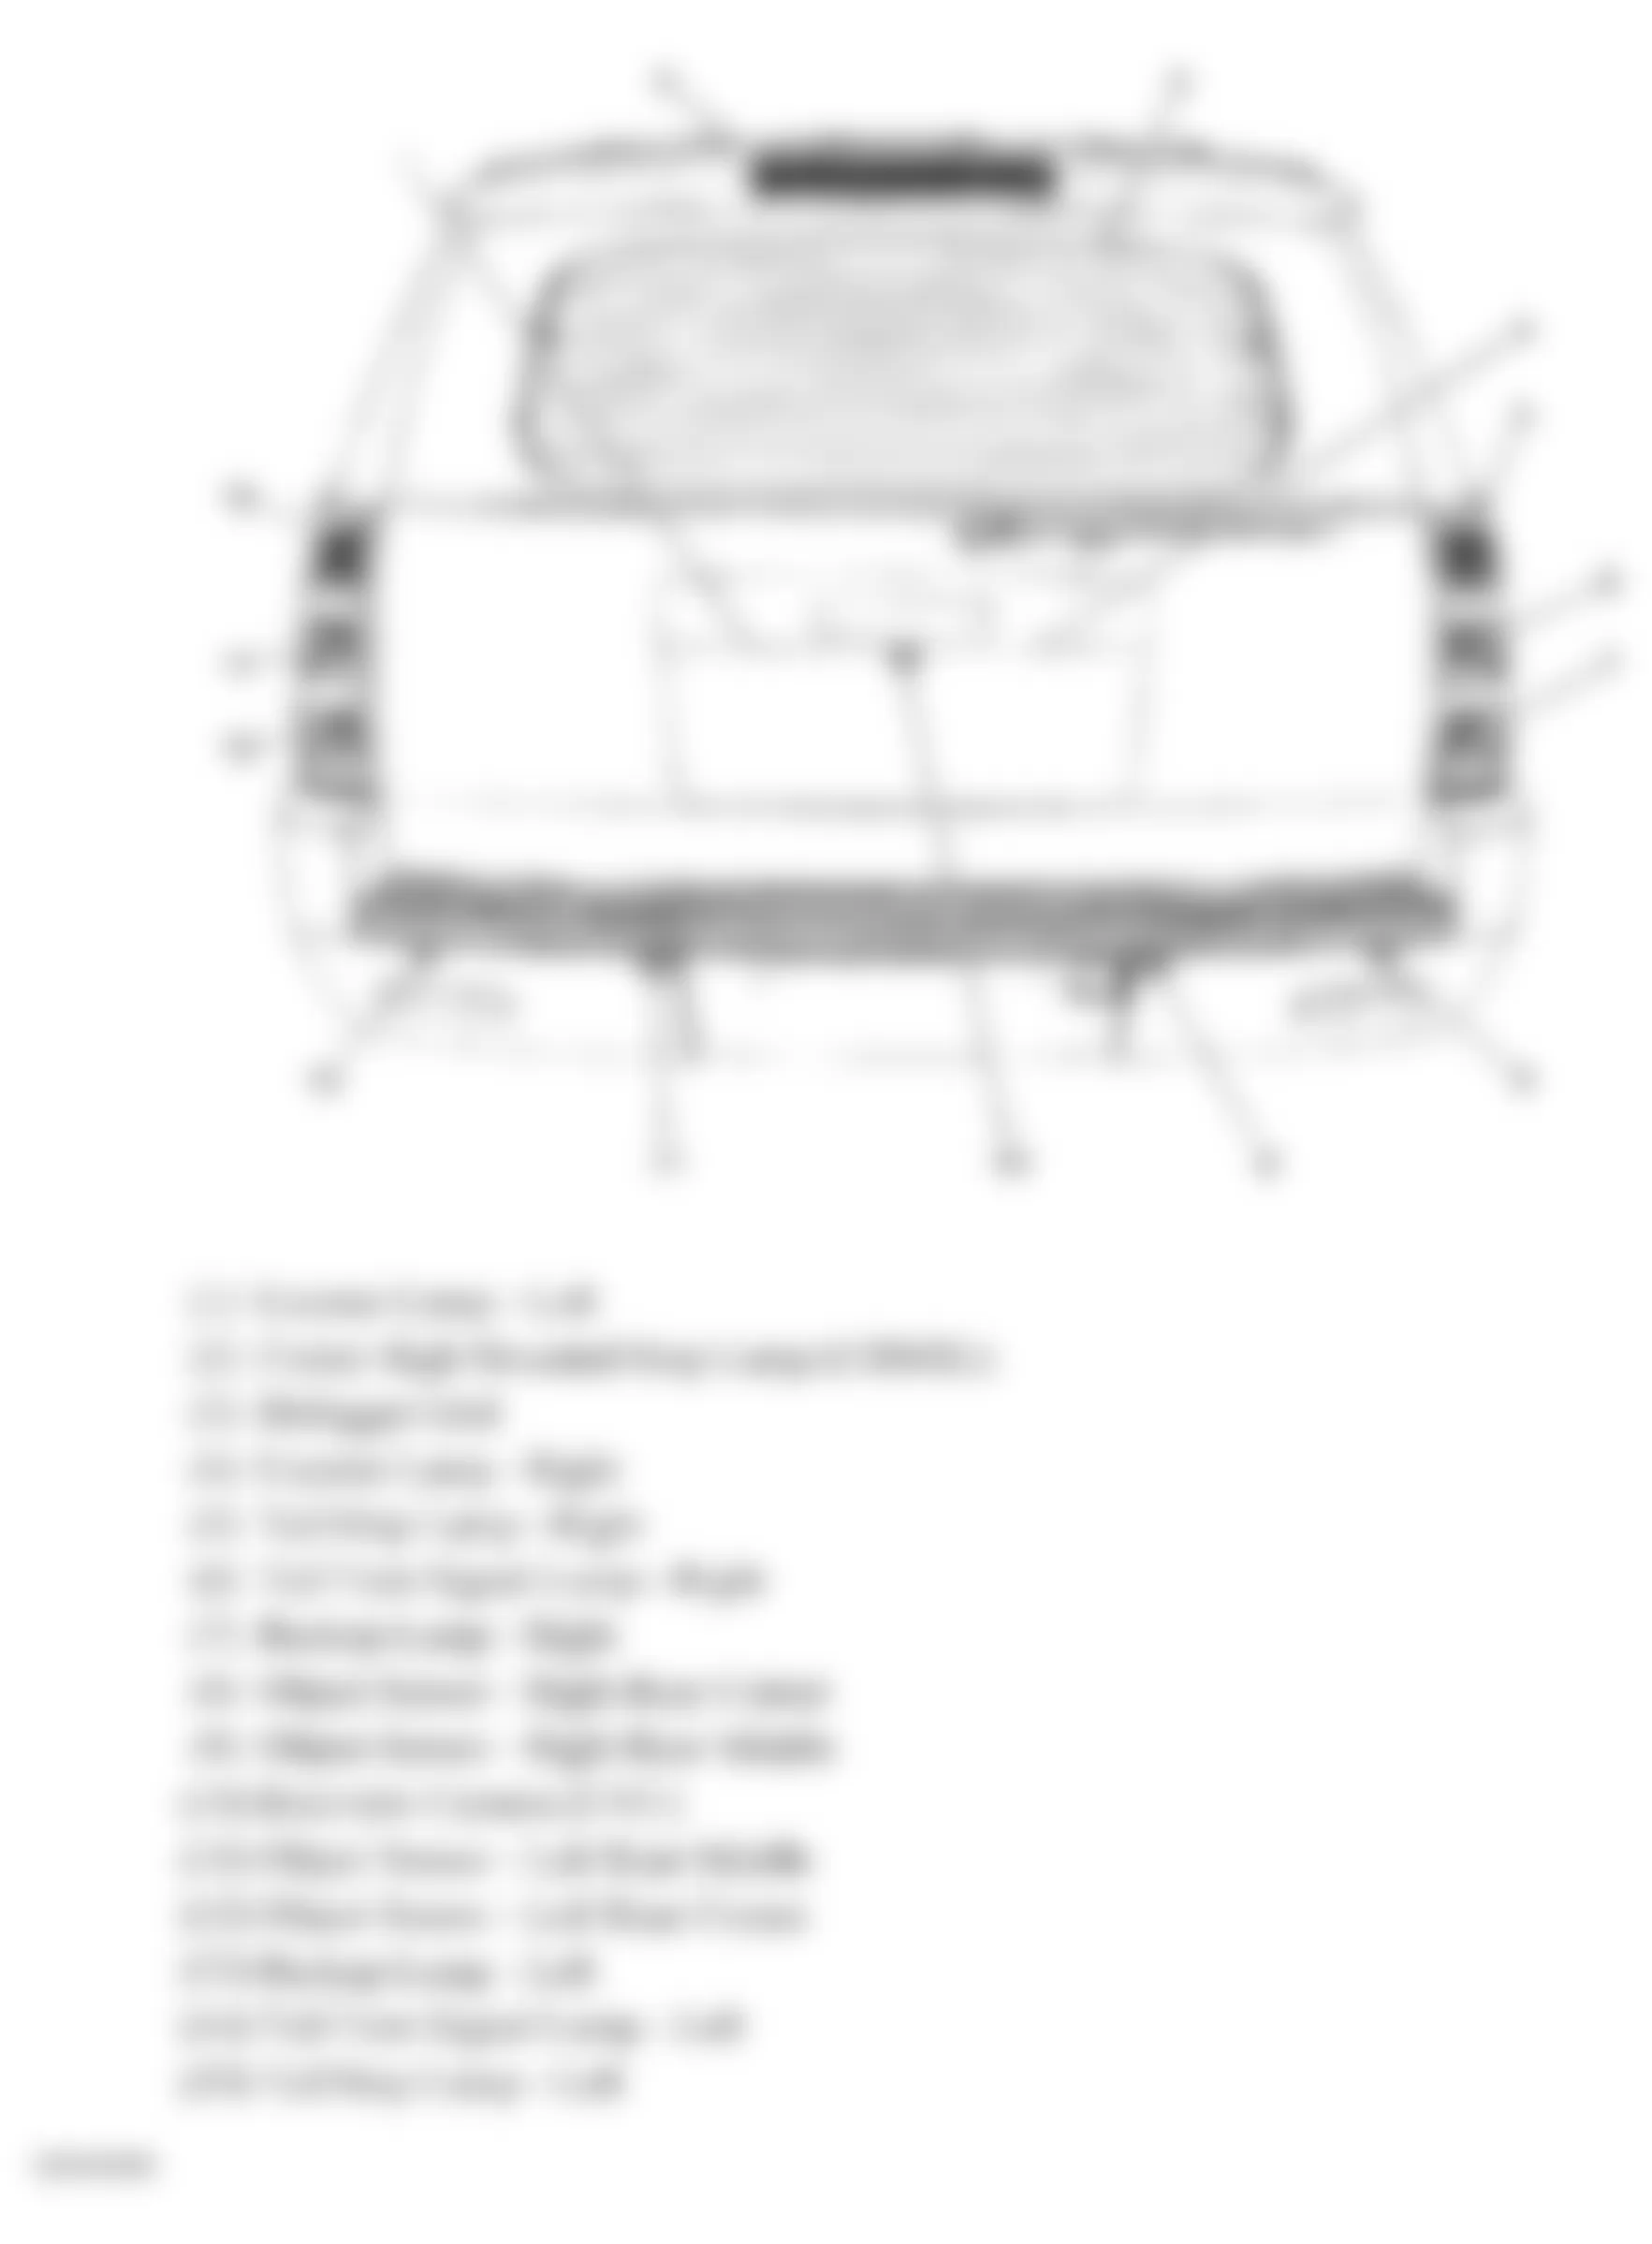 GMC Yukon XL C2500 2008 - Component Locations -  Rear Of Vehicle (Yukon W/One Piece Liftgate)